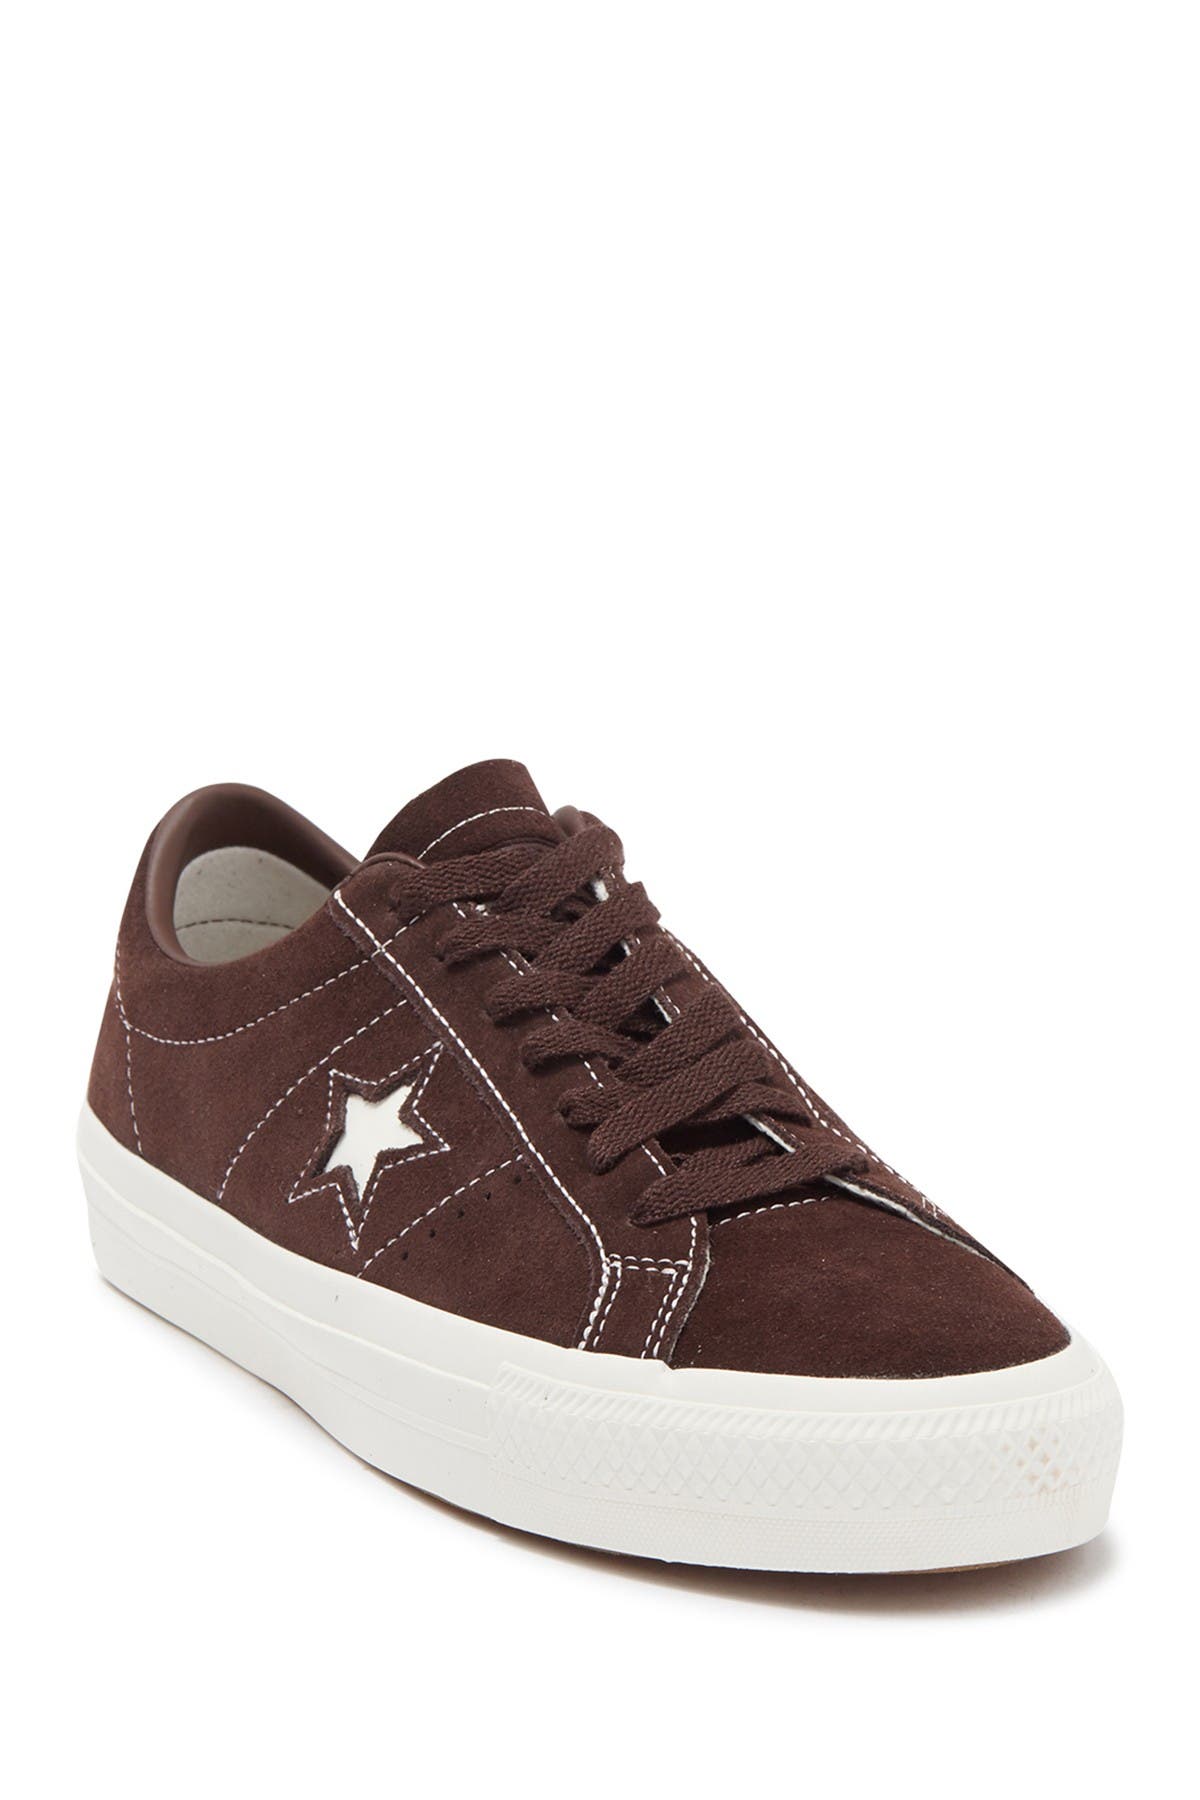 Converse | One Star Pro Oxford Sneaker 